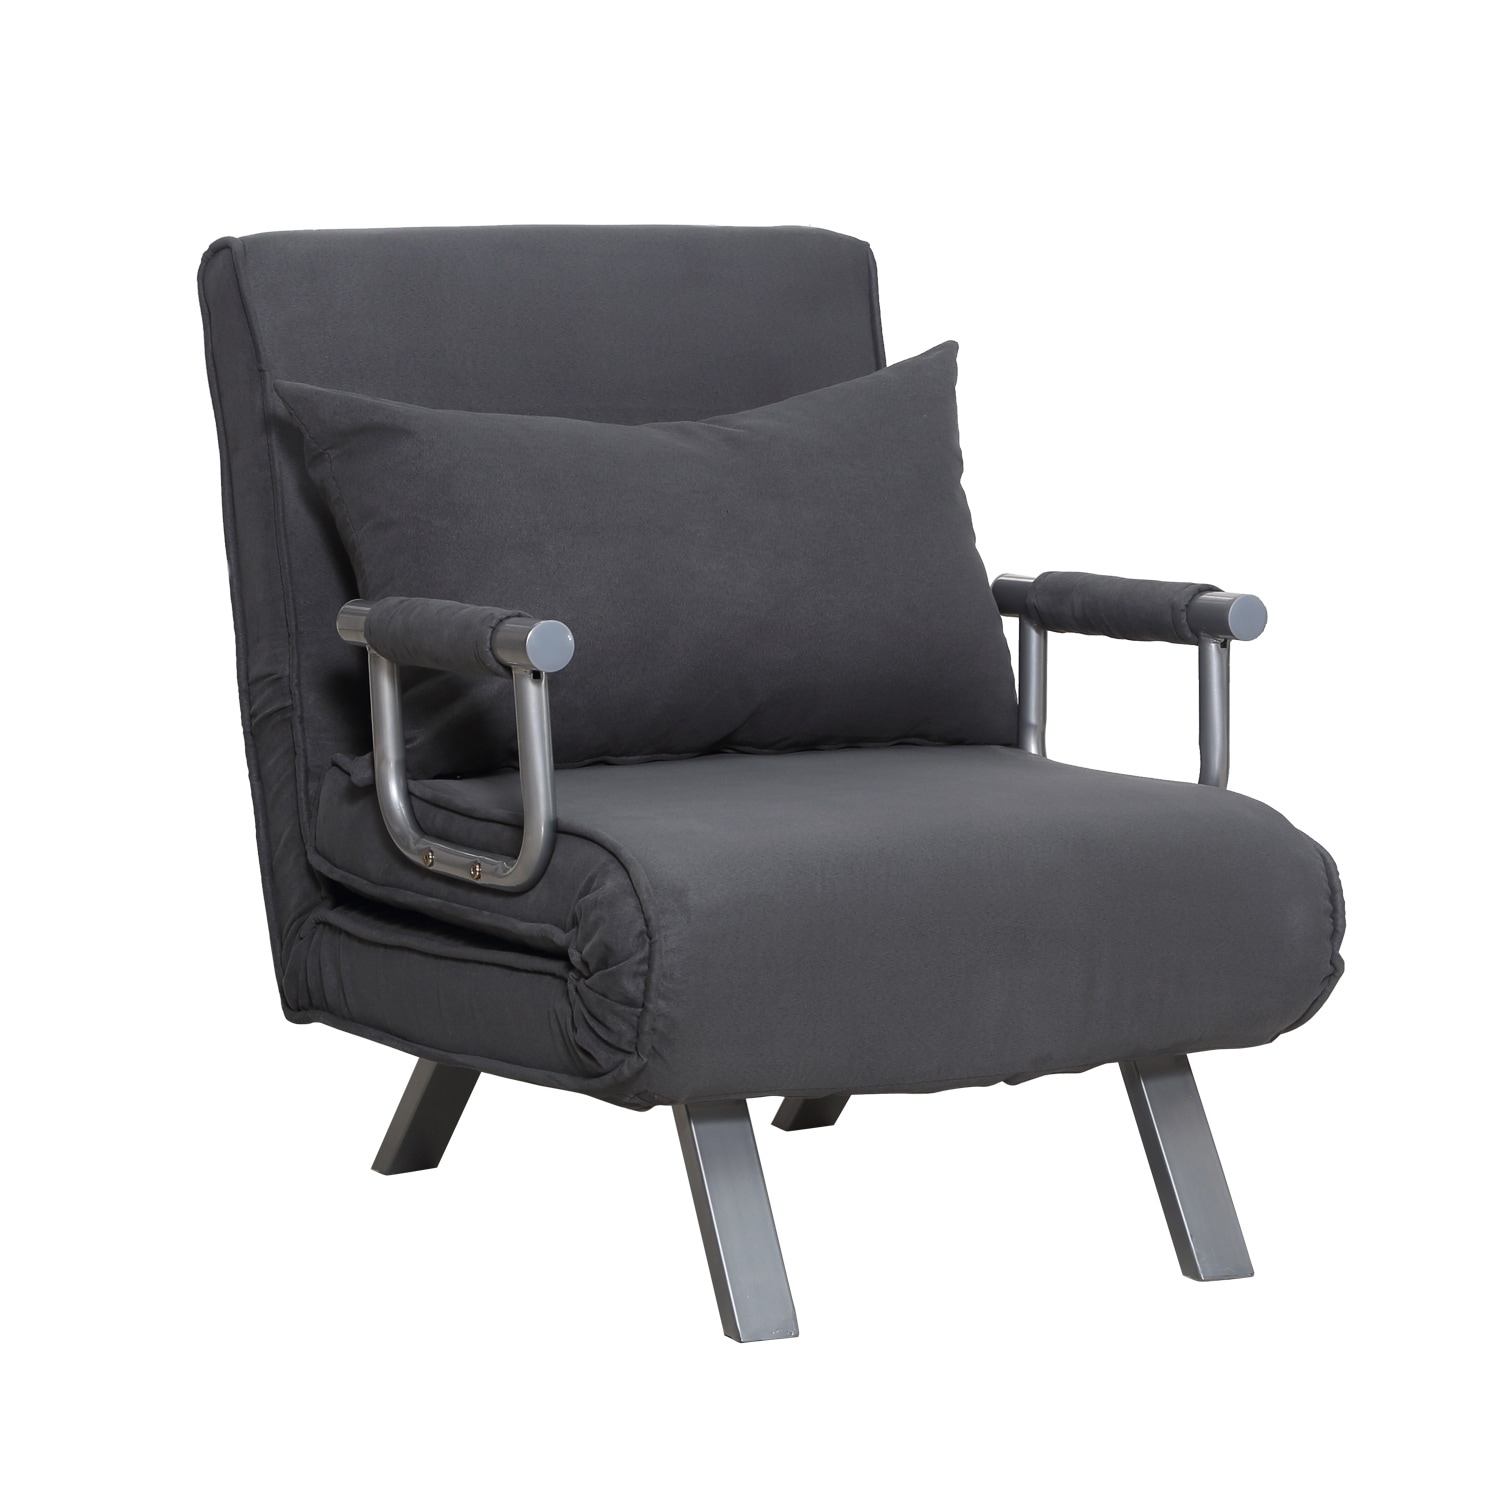 https://ak1.ostkcdn.com/images/products/17967058/HomCom-5-Position-Folding-Sleeper-Chair-ddac6a5b-b045-40bf-96f2-a789215feb1d.jpg